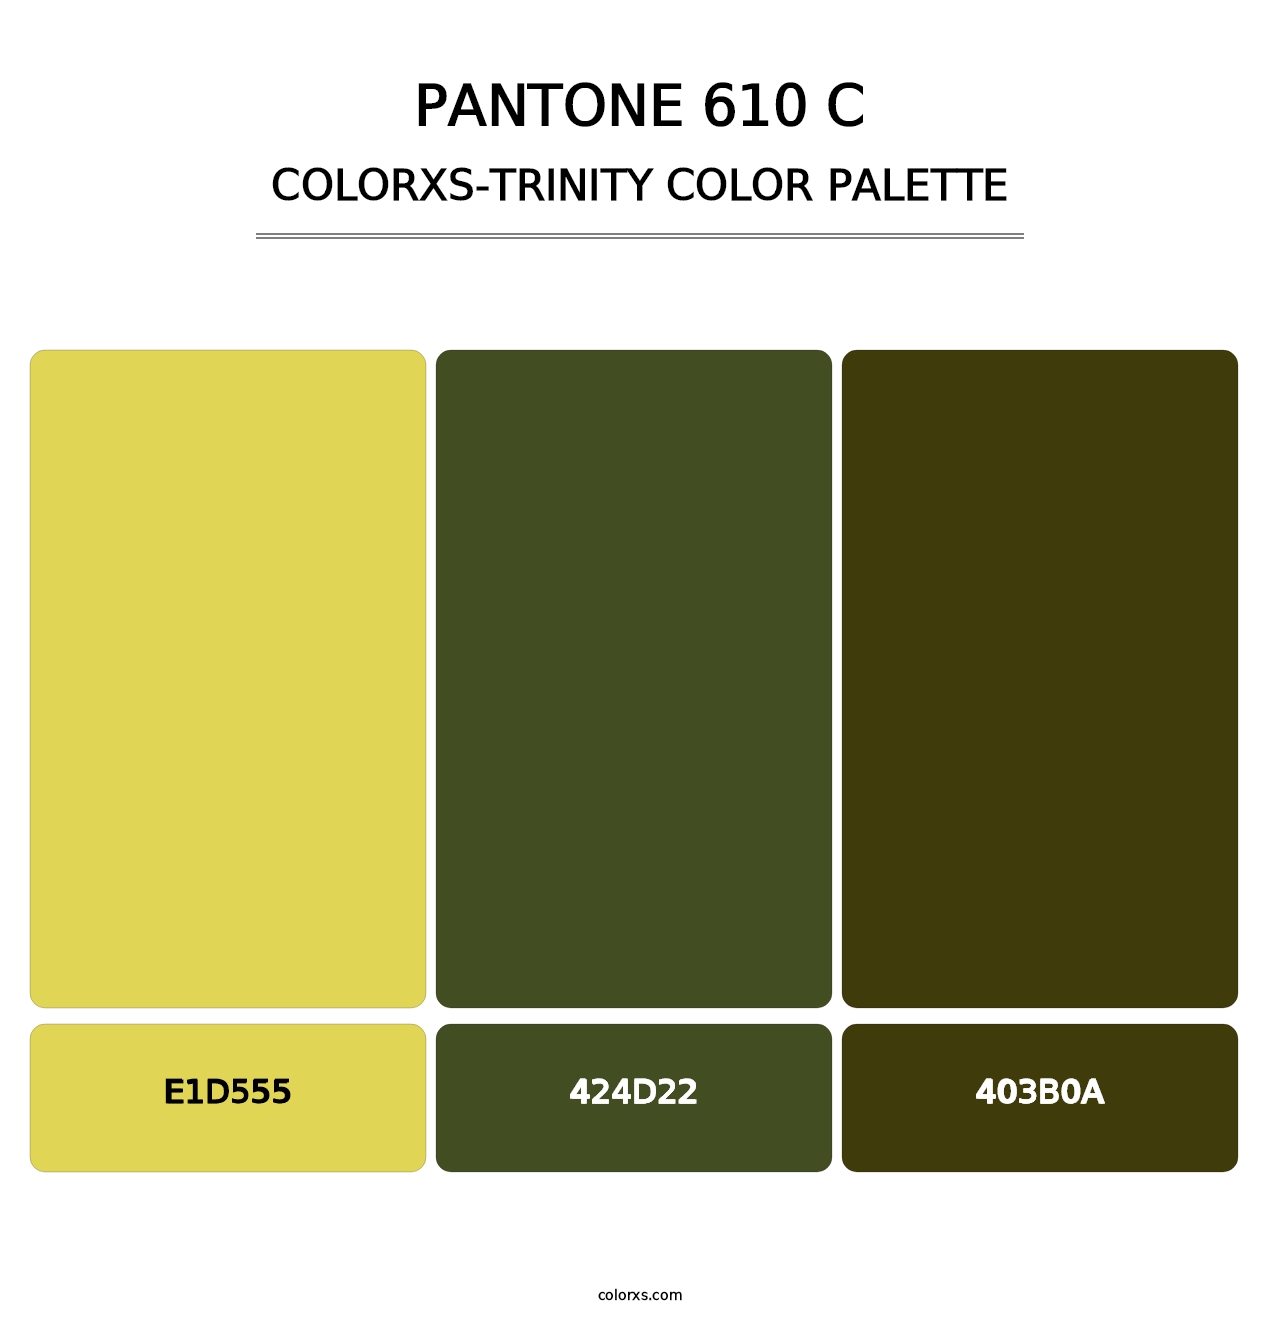 PANTONE 610 C - Colorxs Trinity Palette